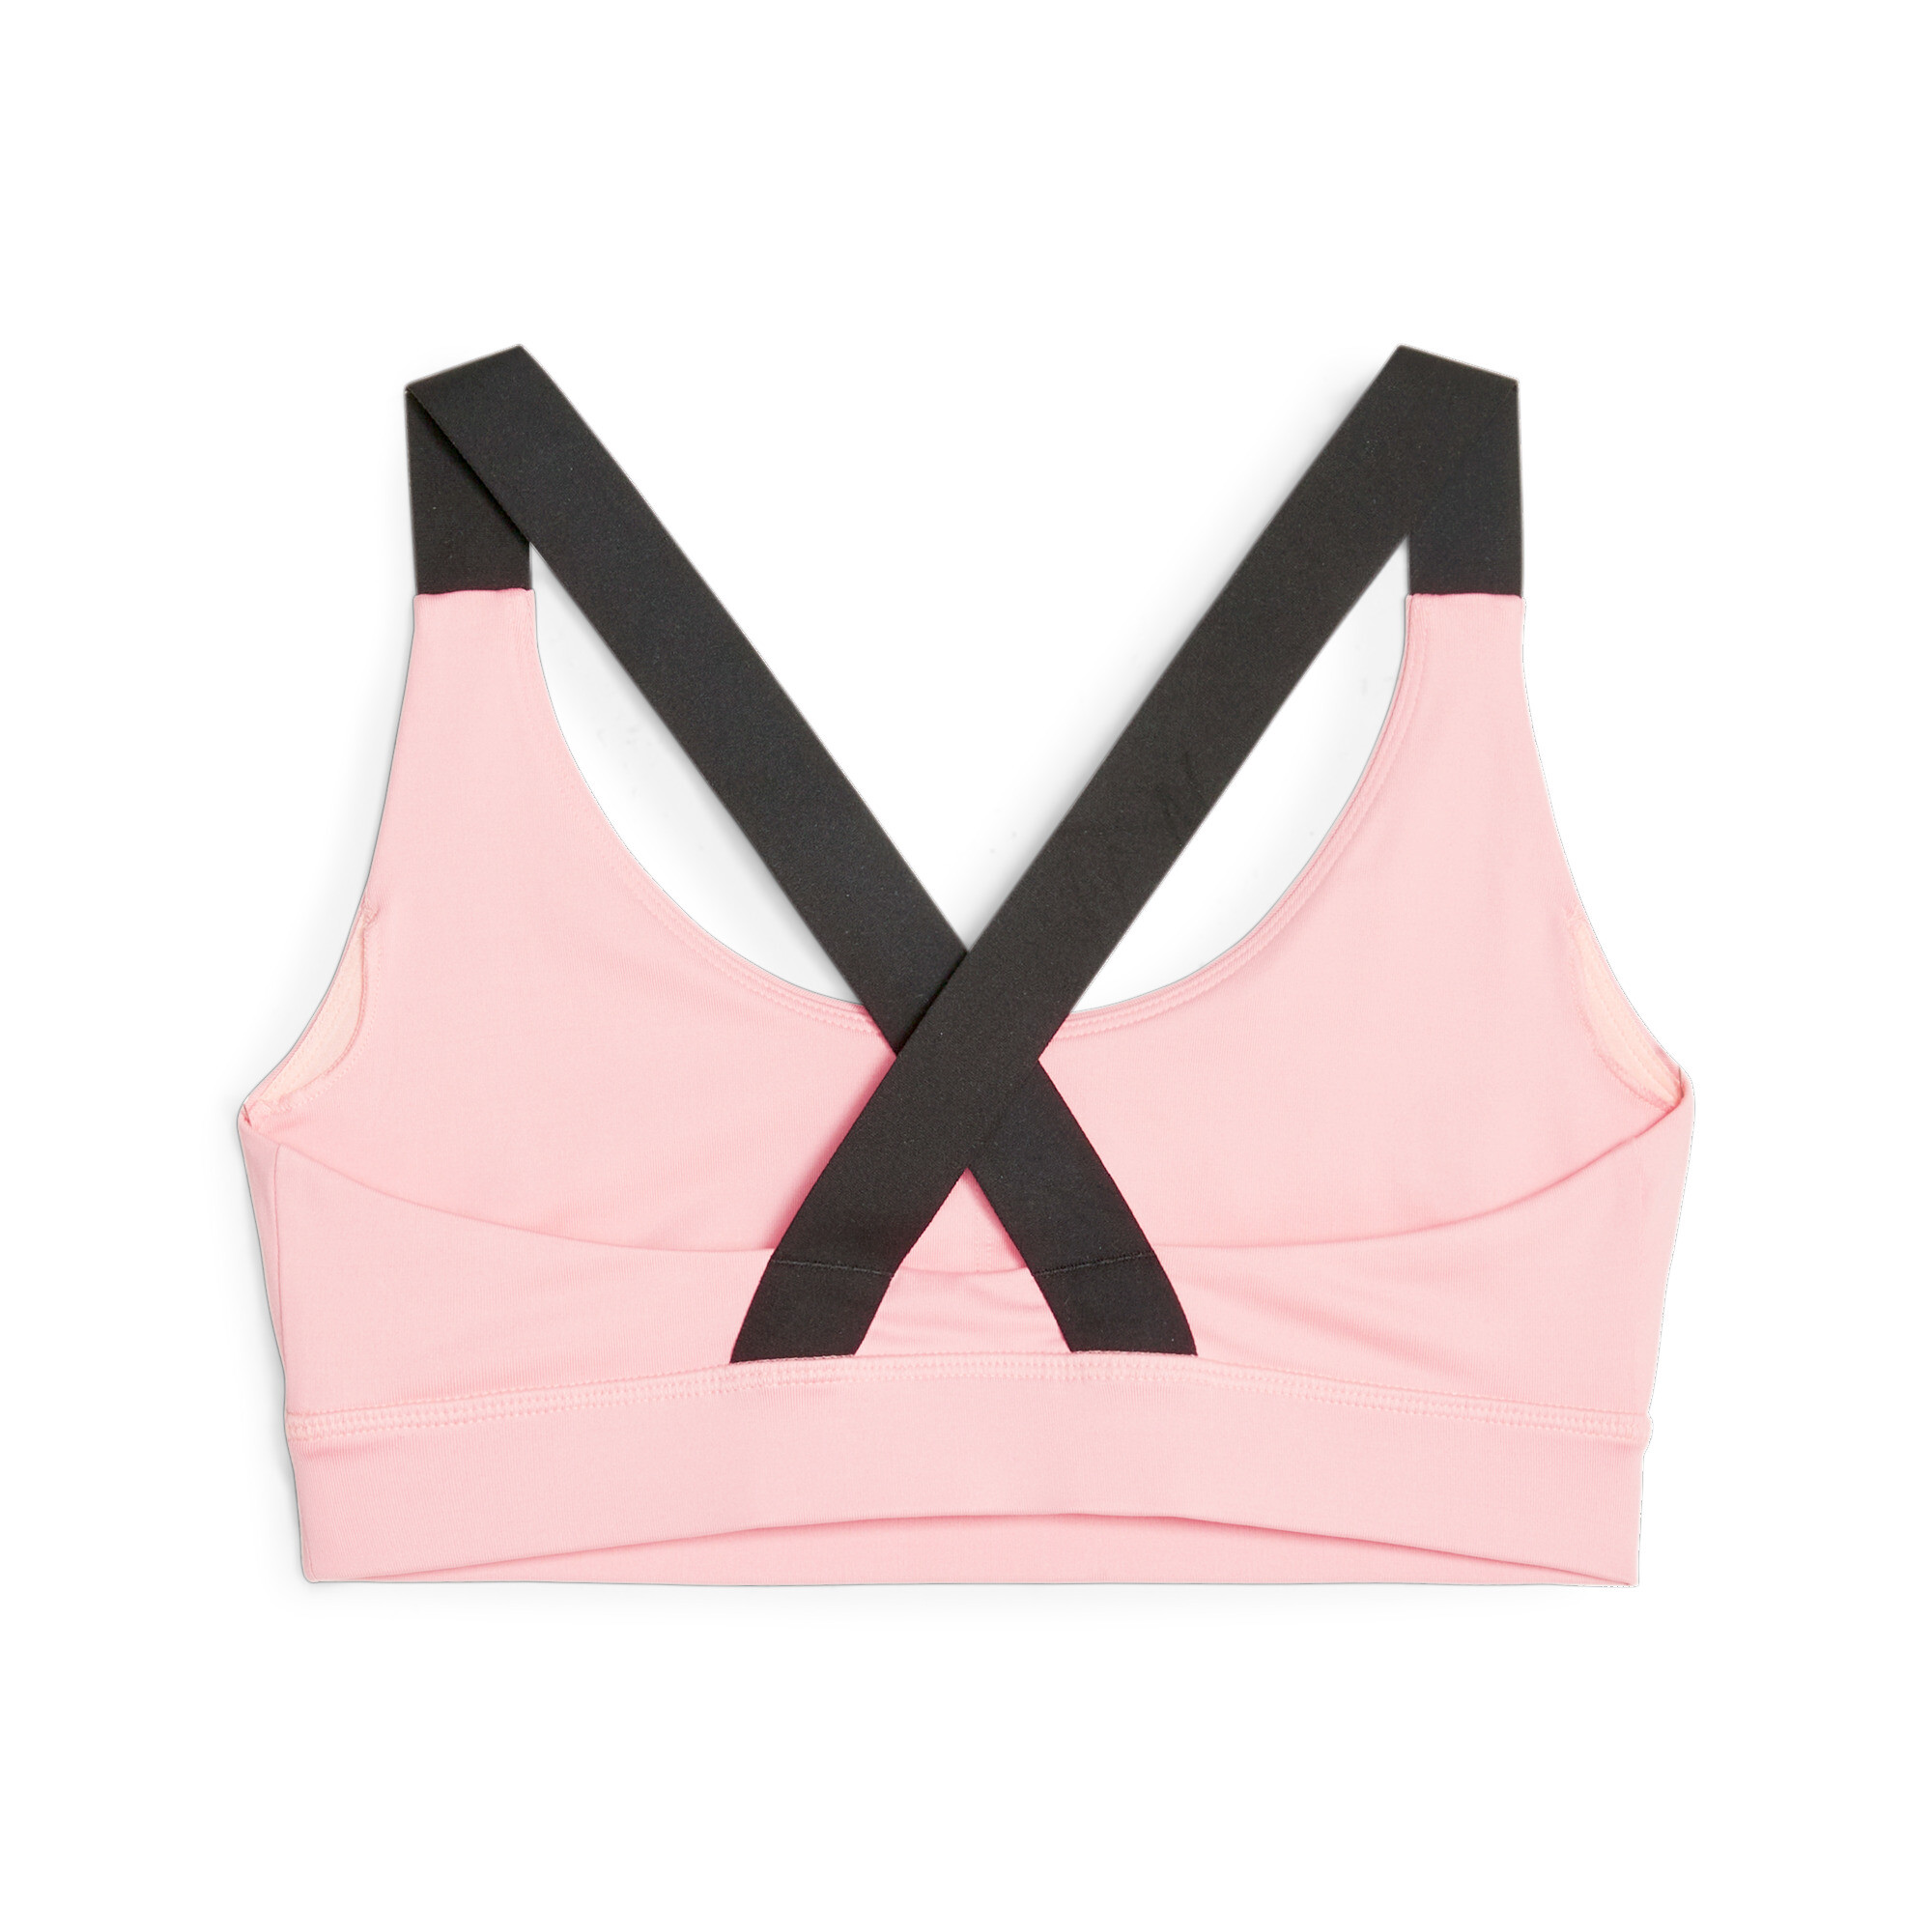 Women's Puma Fit Mid Impact Training Bra, Pink, Size XS, Clothing